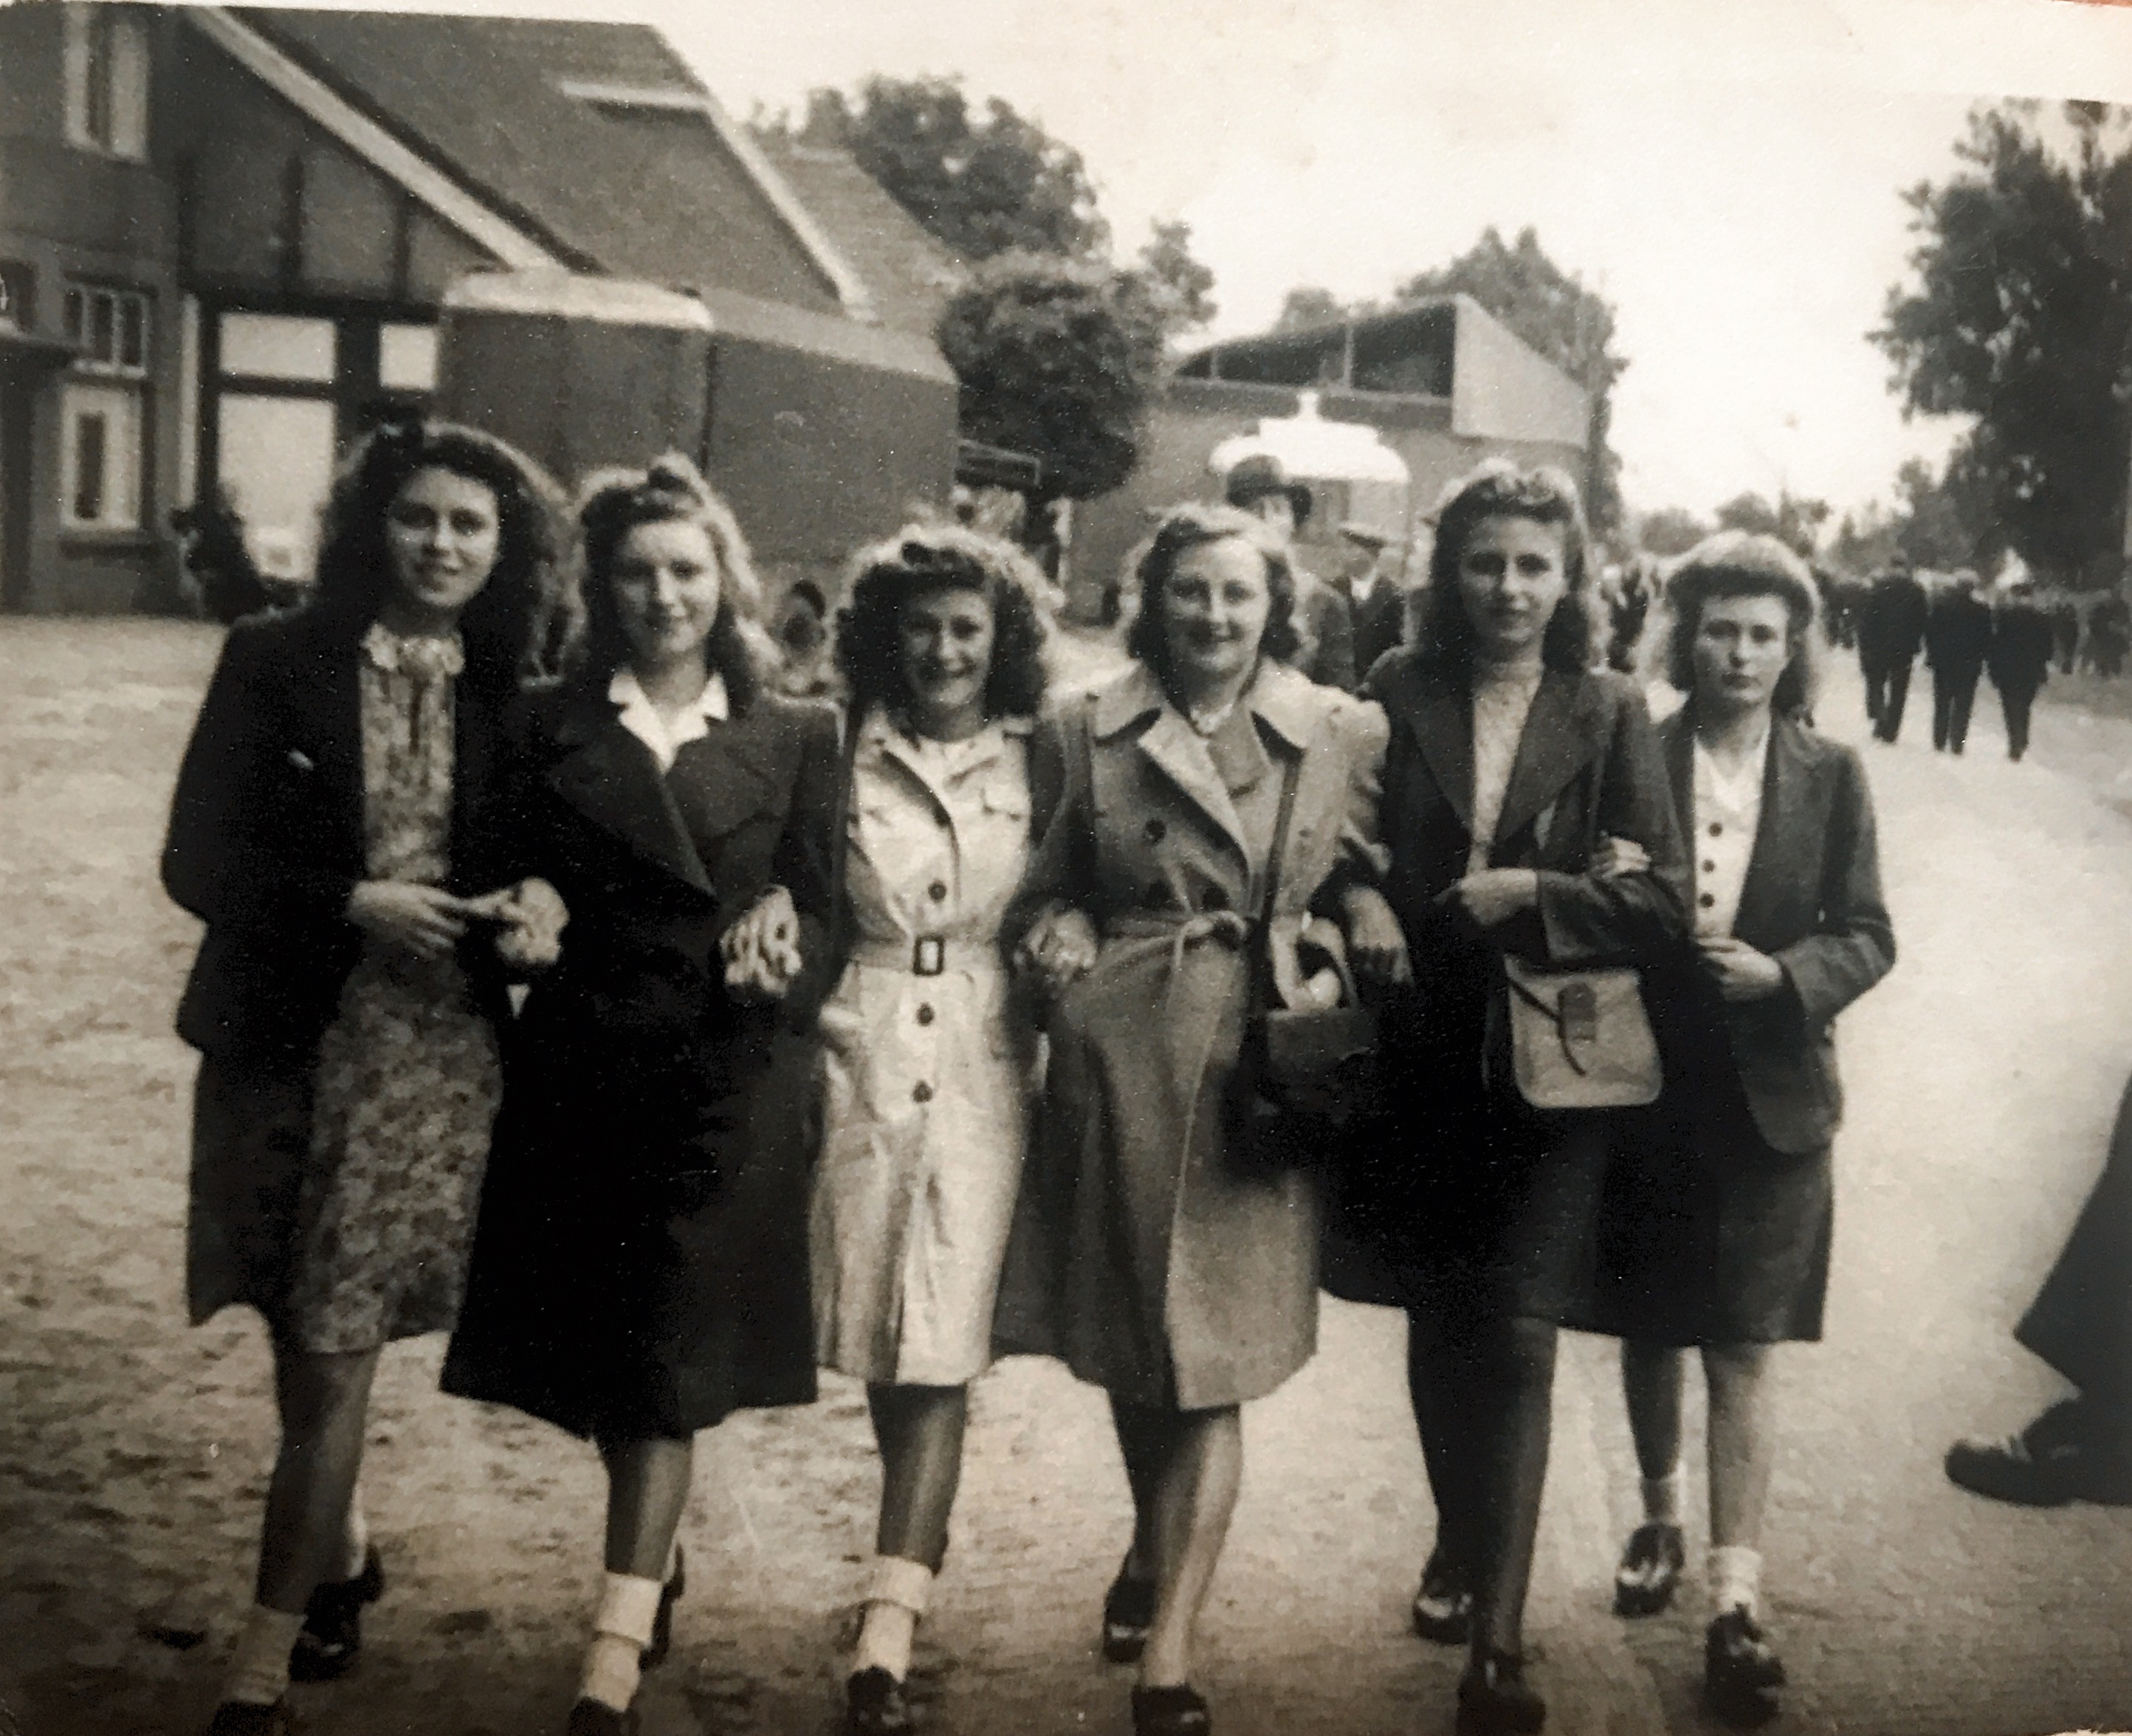 A.Drayer,M.Timmer,E de Groot,J.Dijkema,J.Tjarks,H.Pots. Roldermarkt 8 sept. 1946